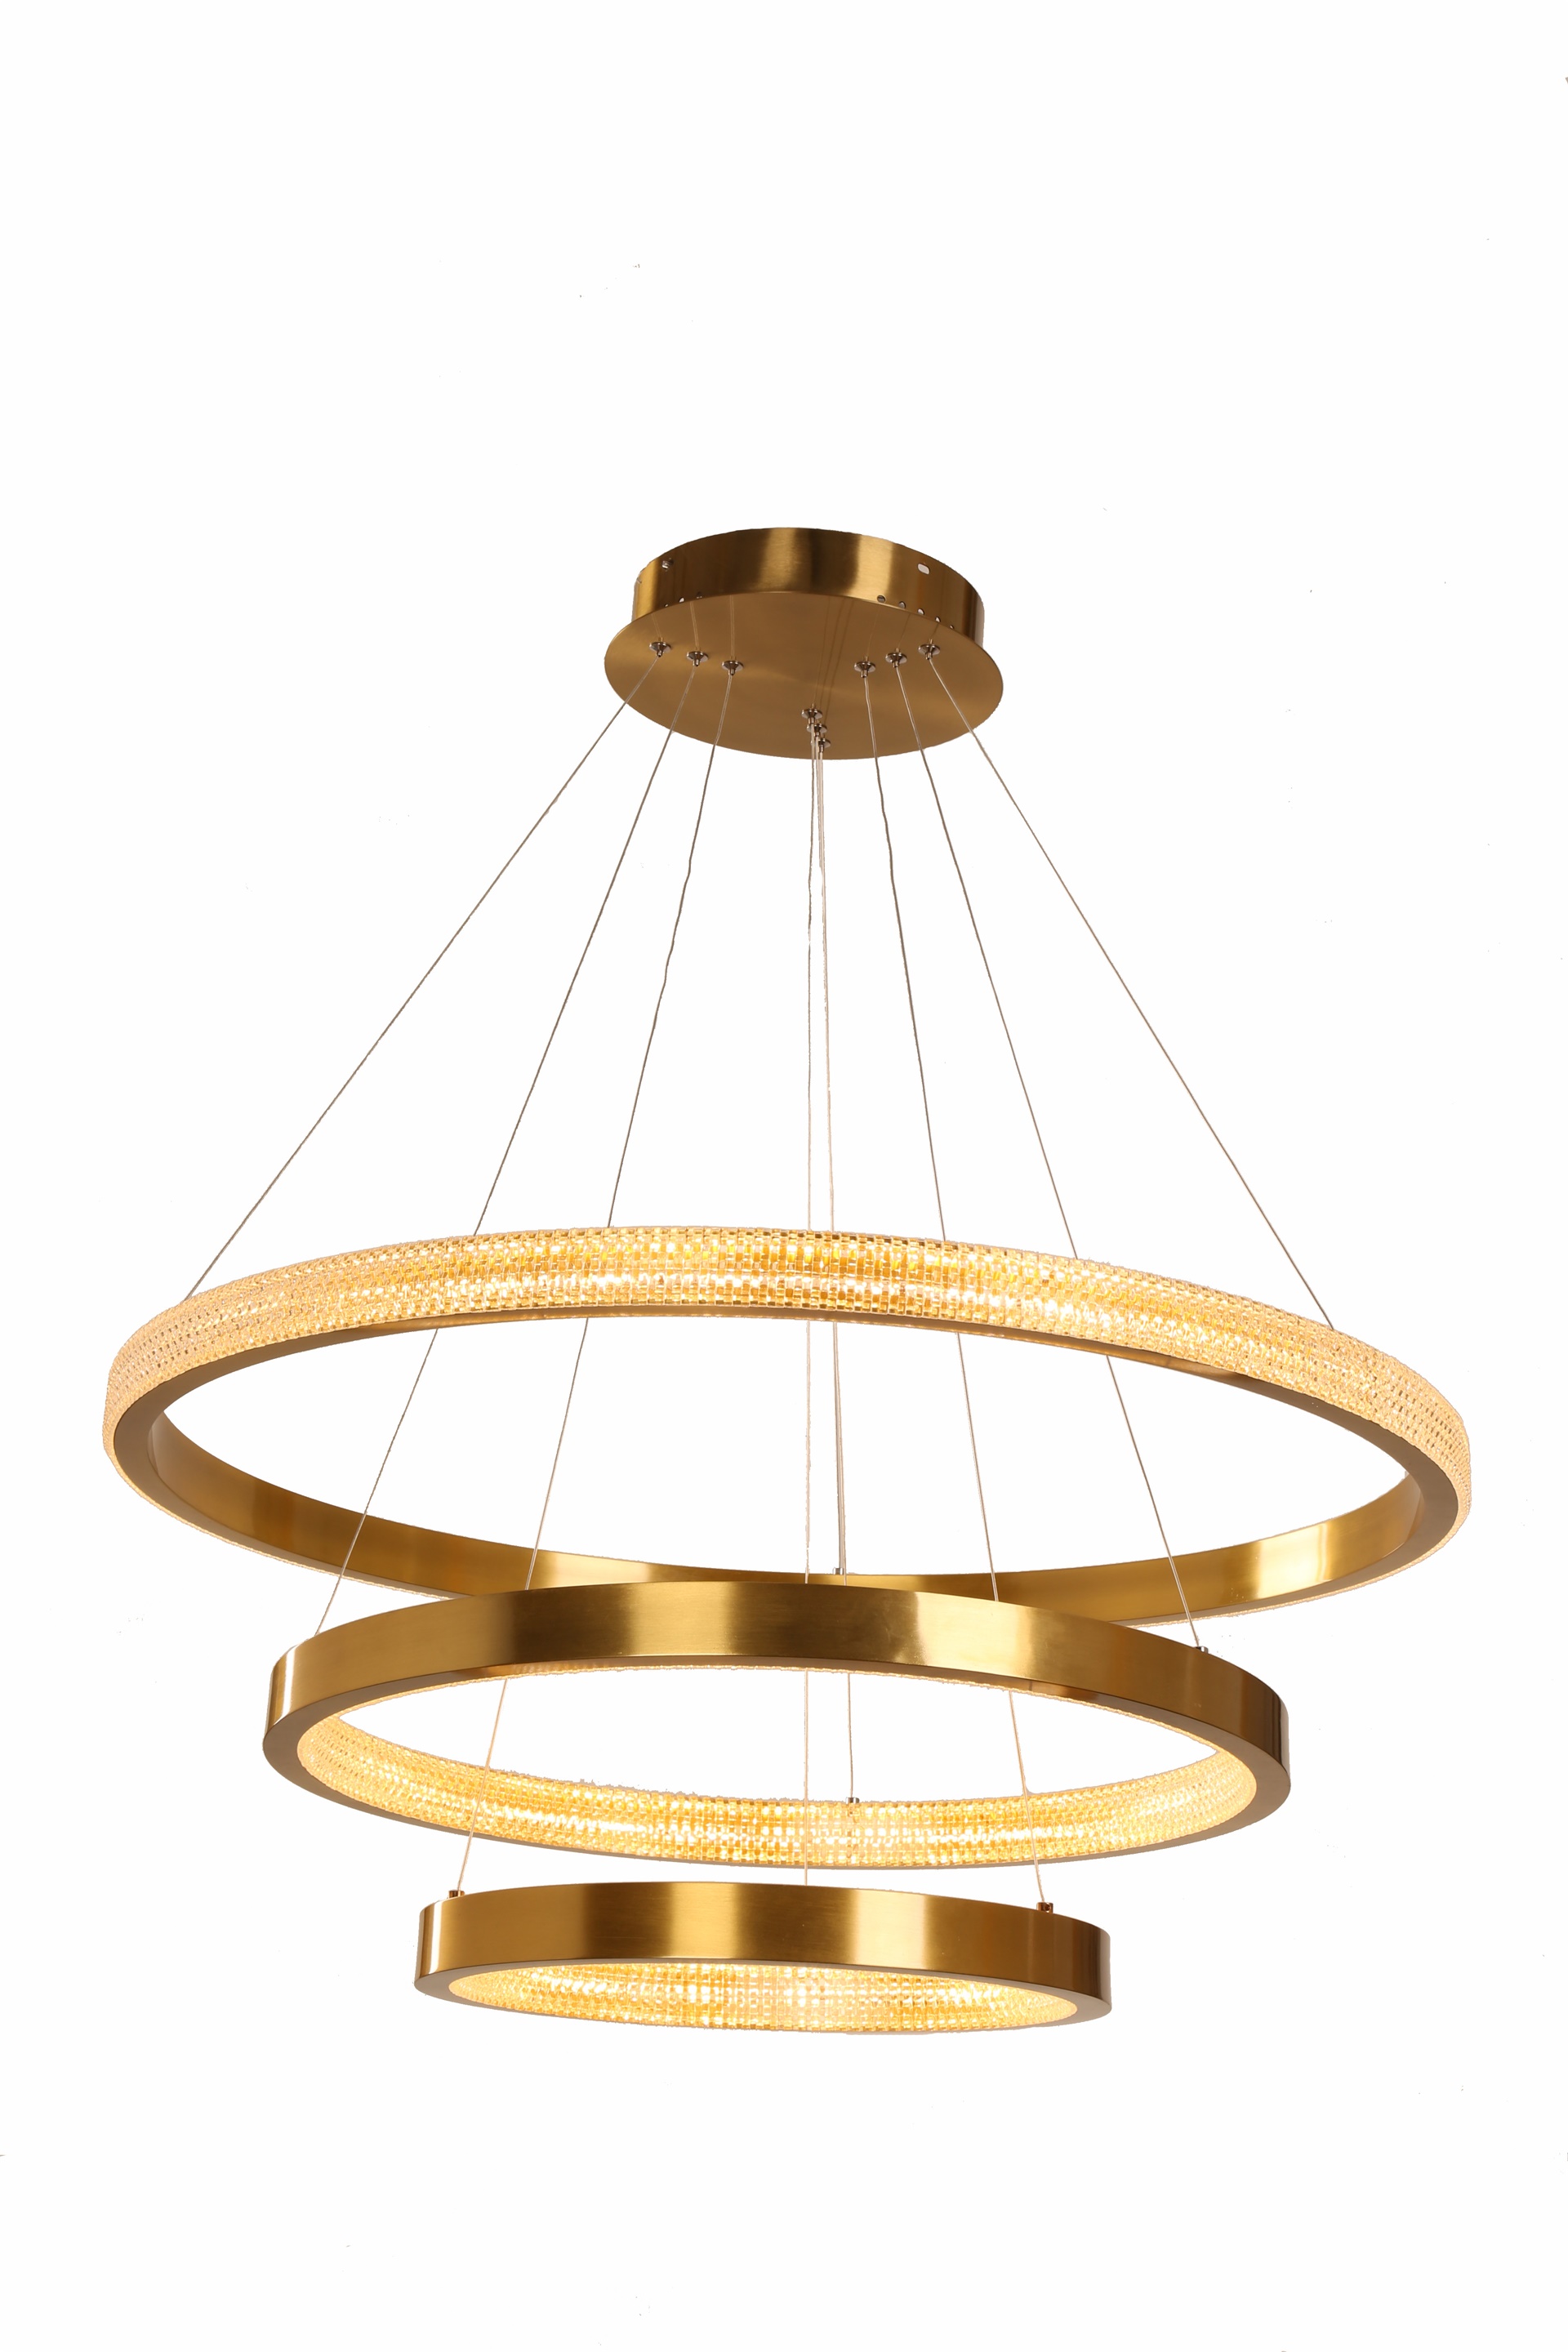 bulk modern led chandeliers lamp producer for kitchen island-2